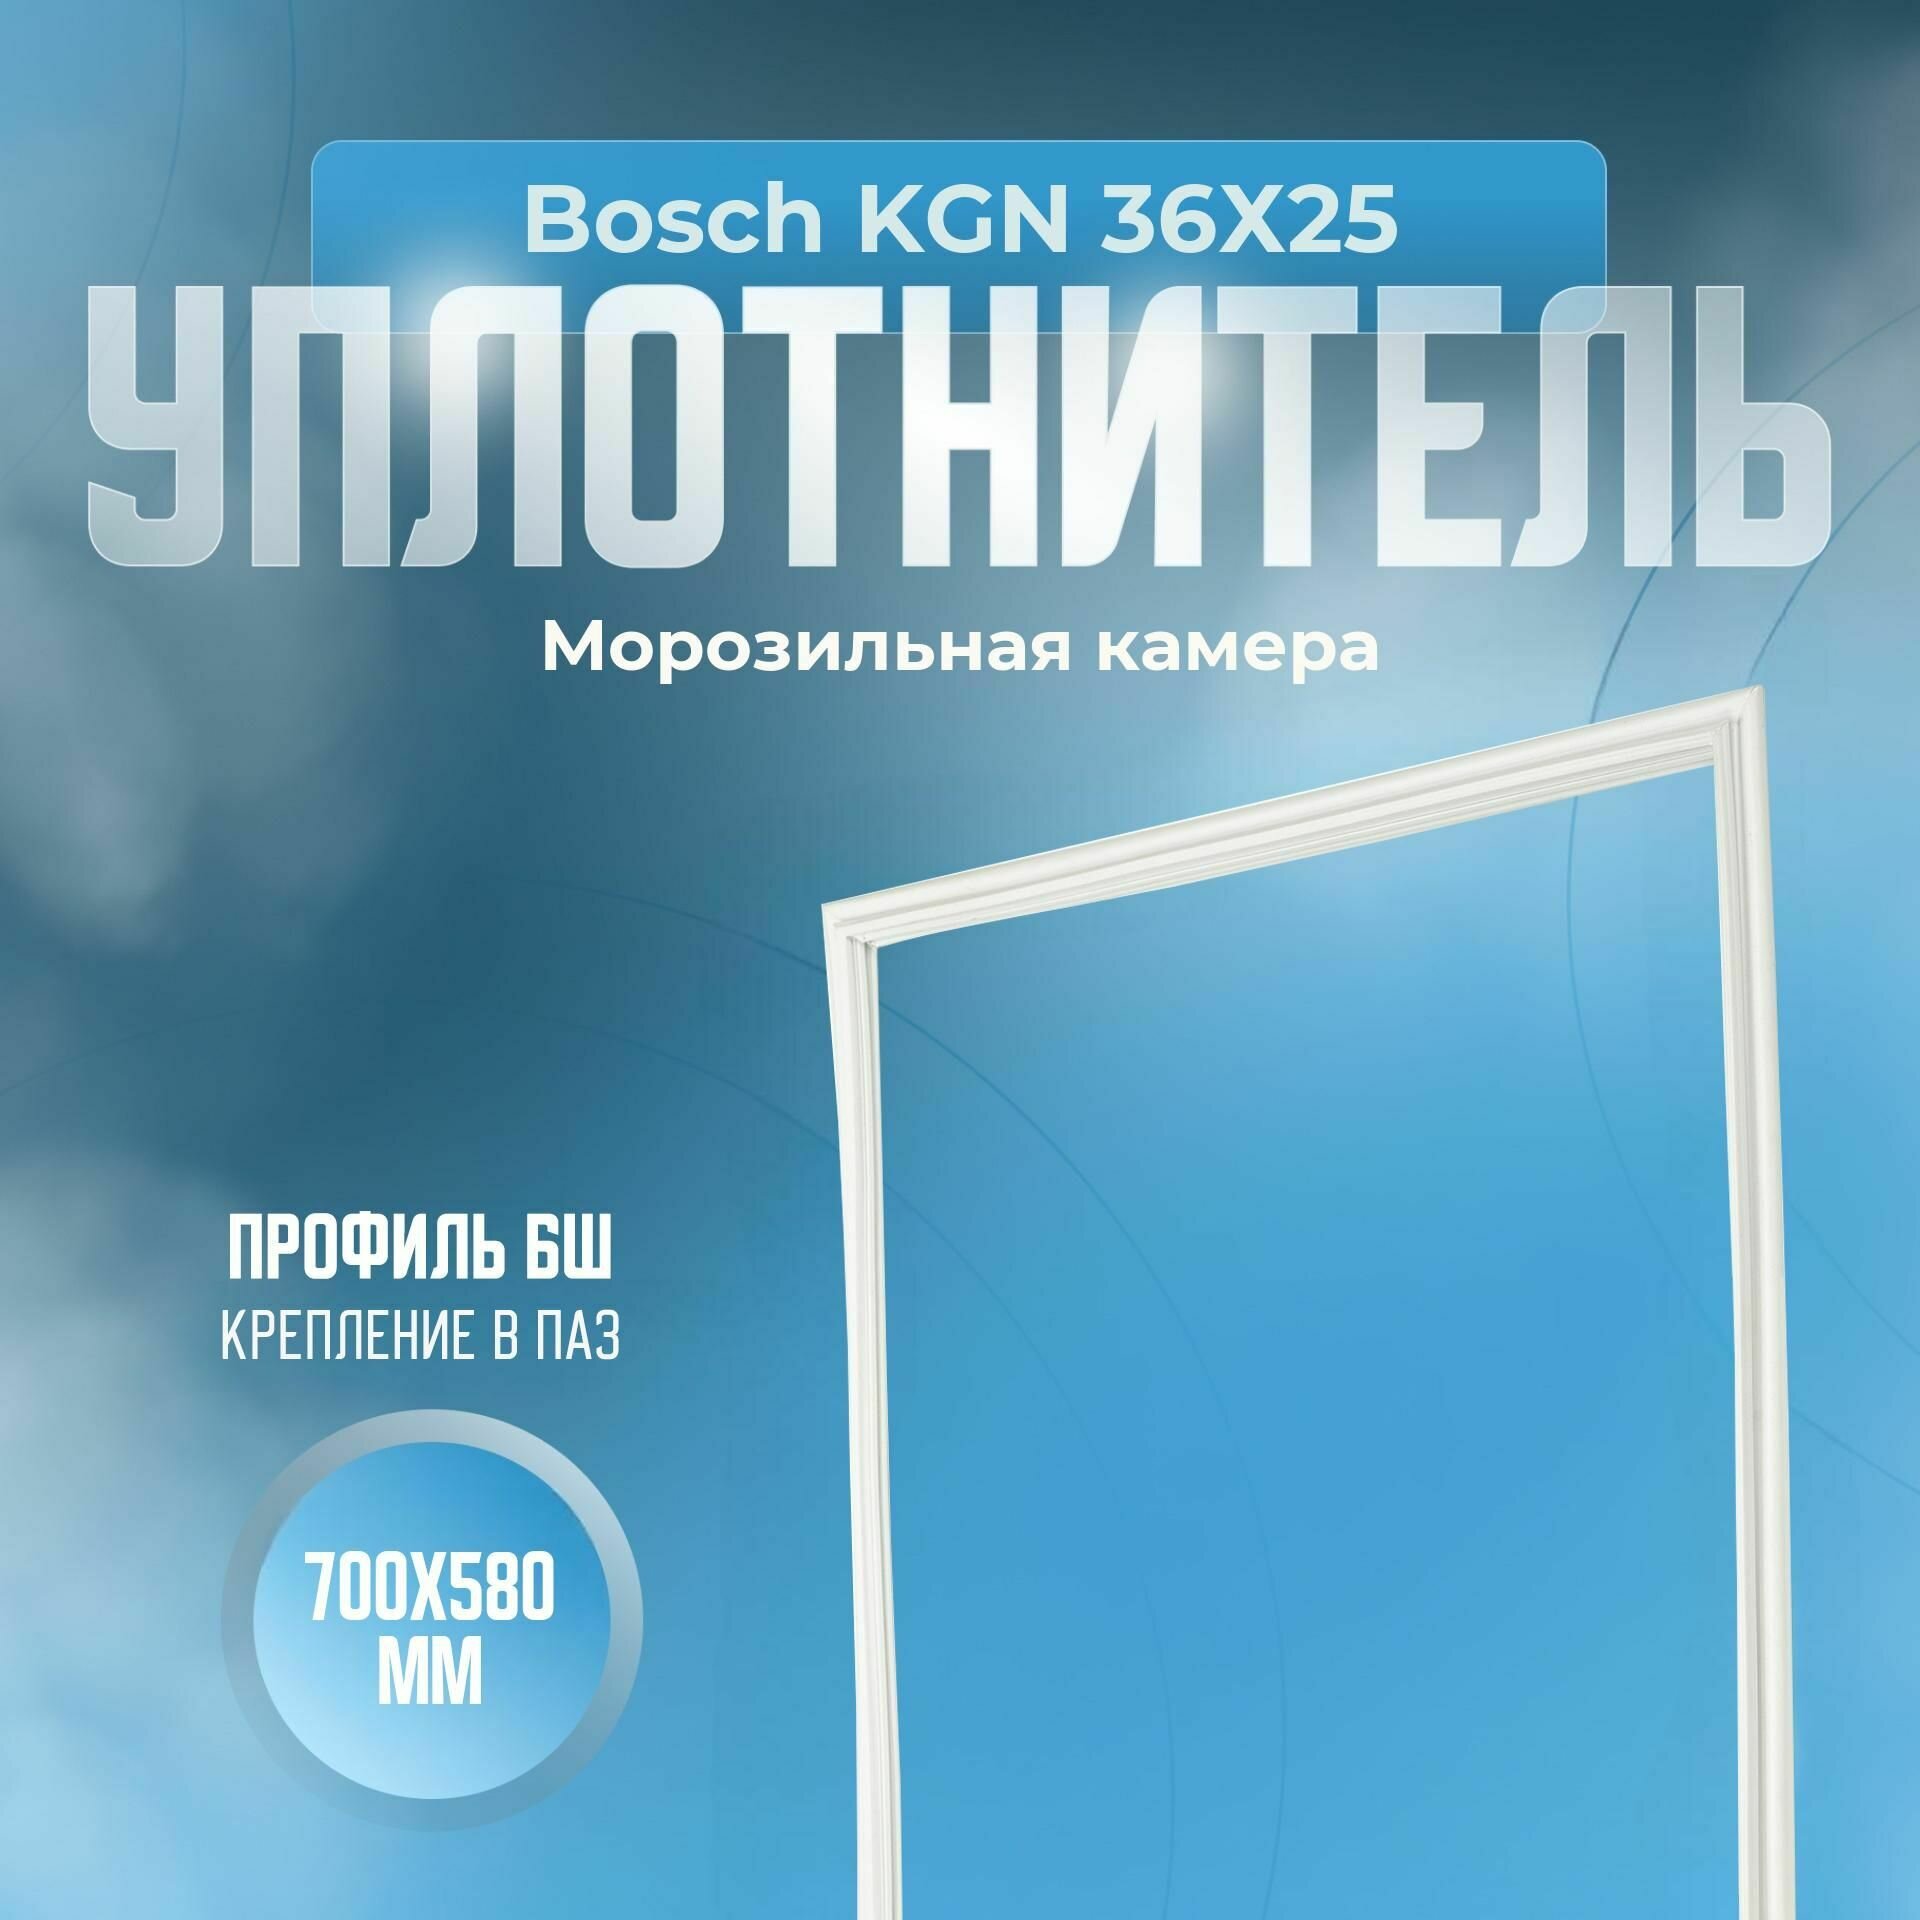 Уплотнитель Bosch KGN 36Х25. м. к, Размер - 700x580 мм. БШ